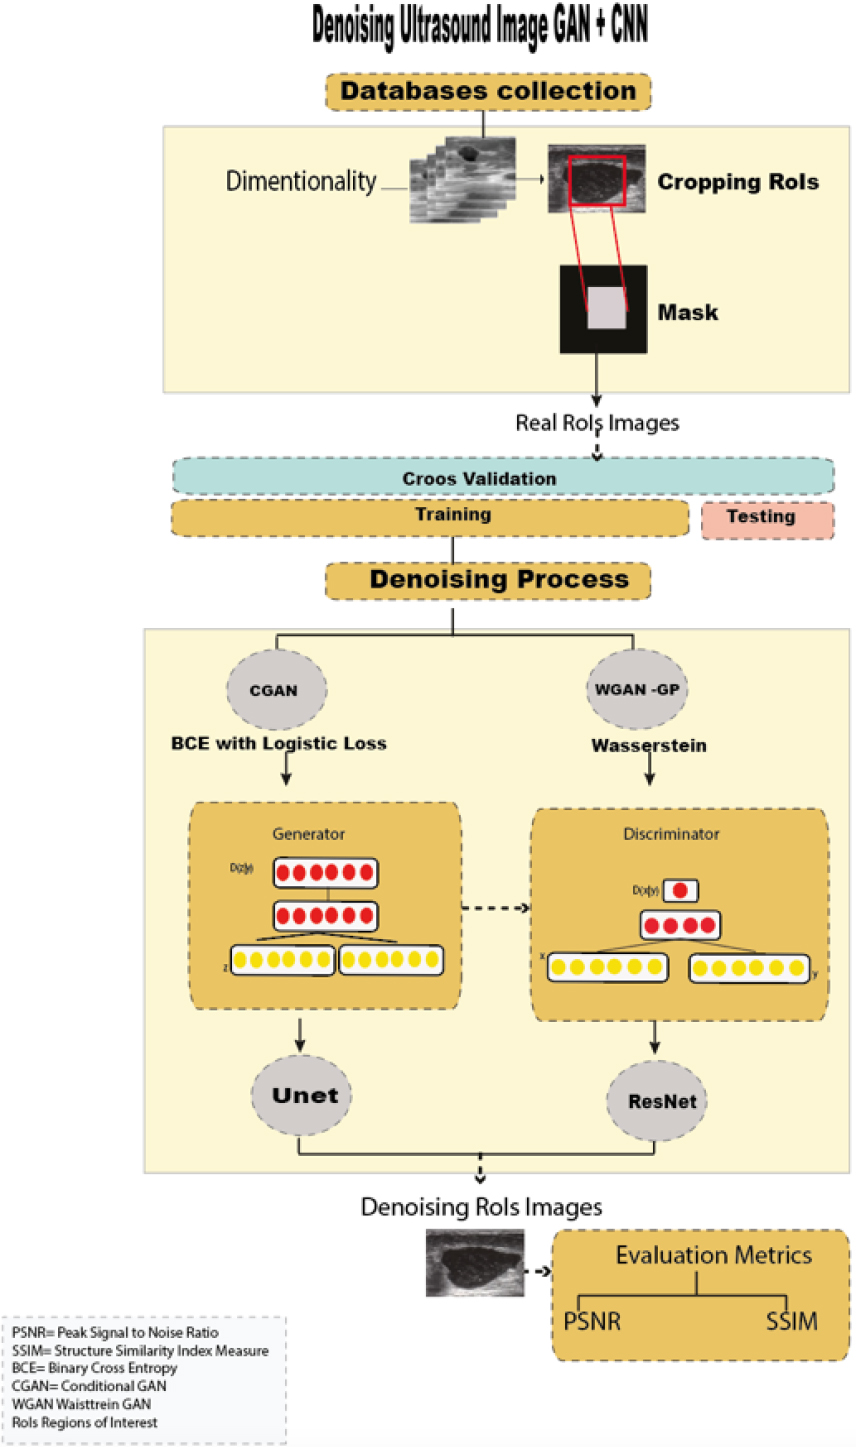 Workflow of GANs+CNN models implementation in breast ultrasound denoising.